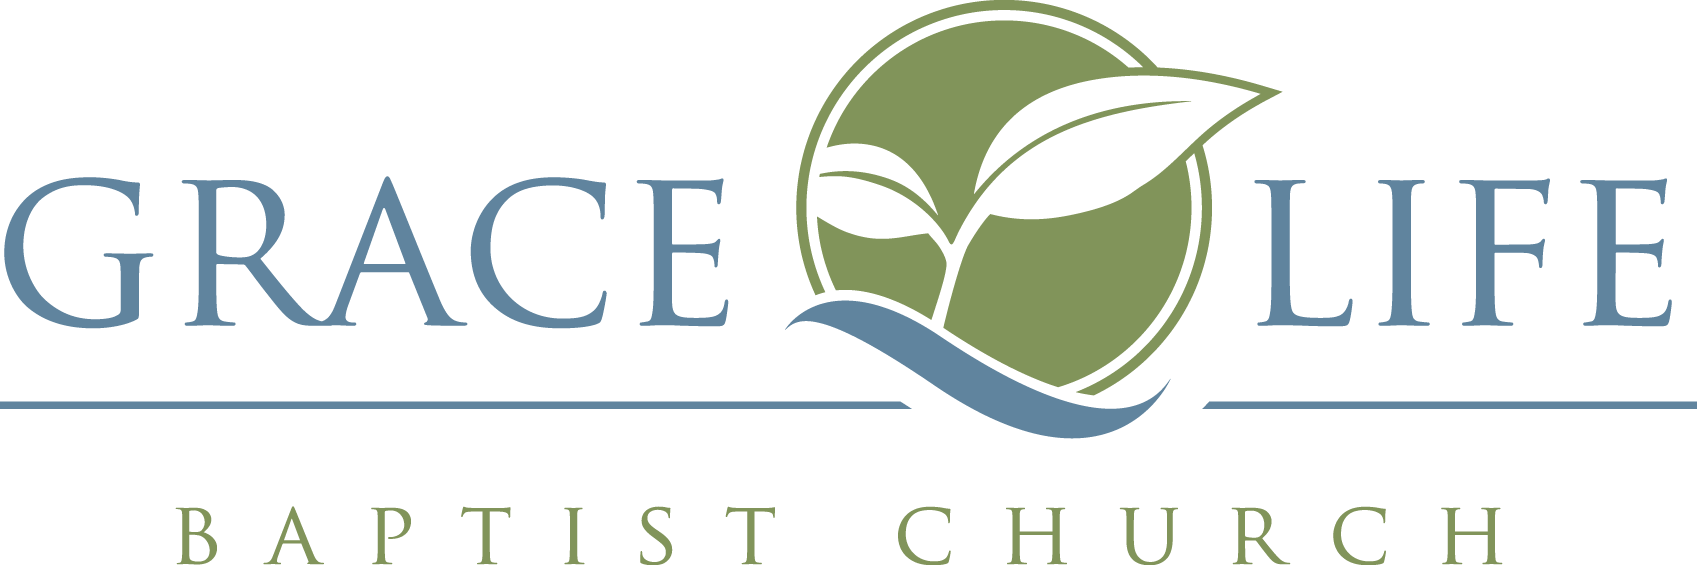 Vacation Bible School, GraceLife Baptist Church